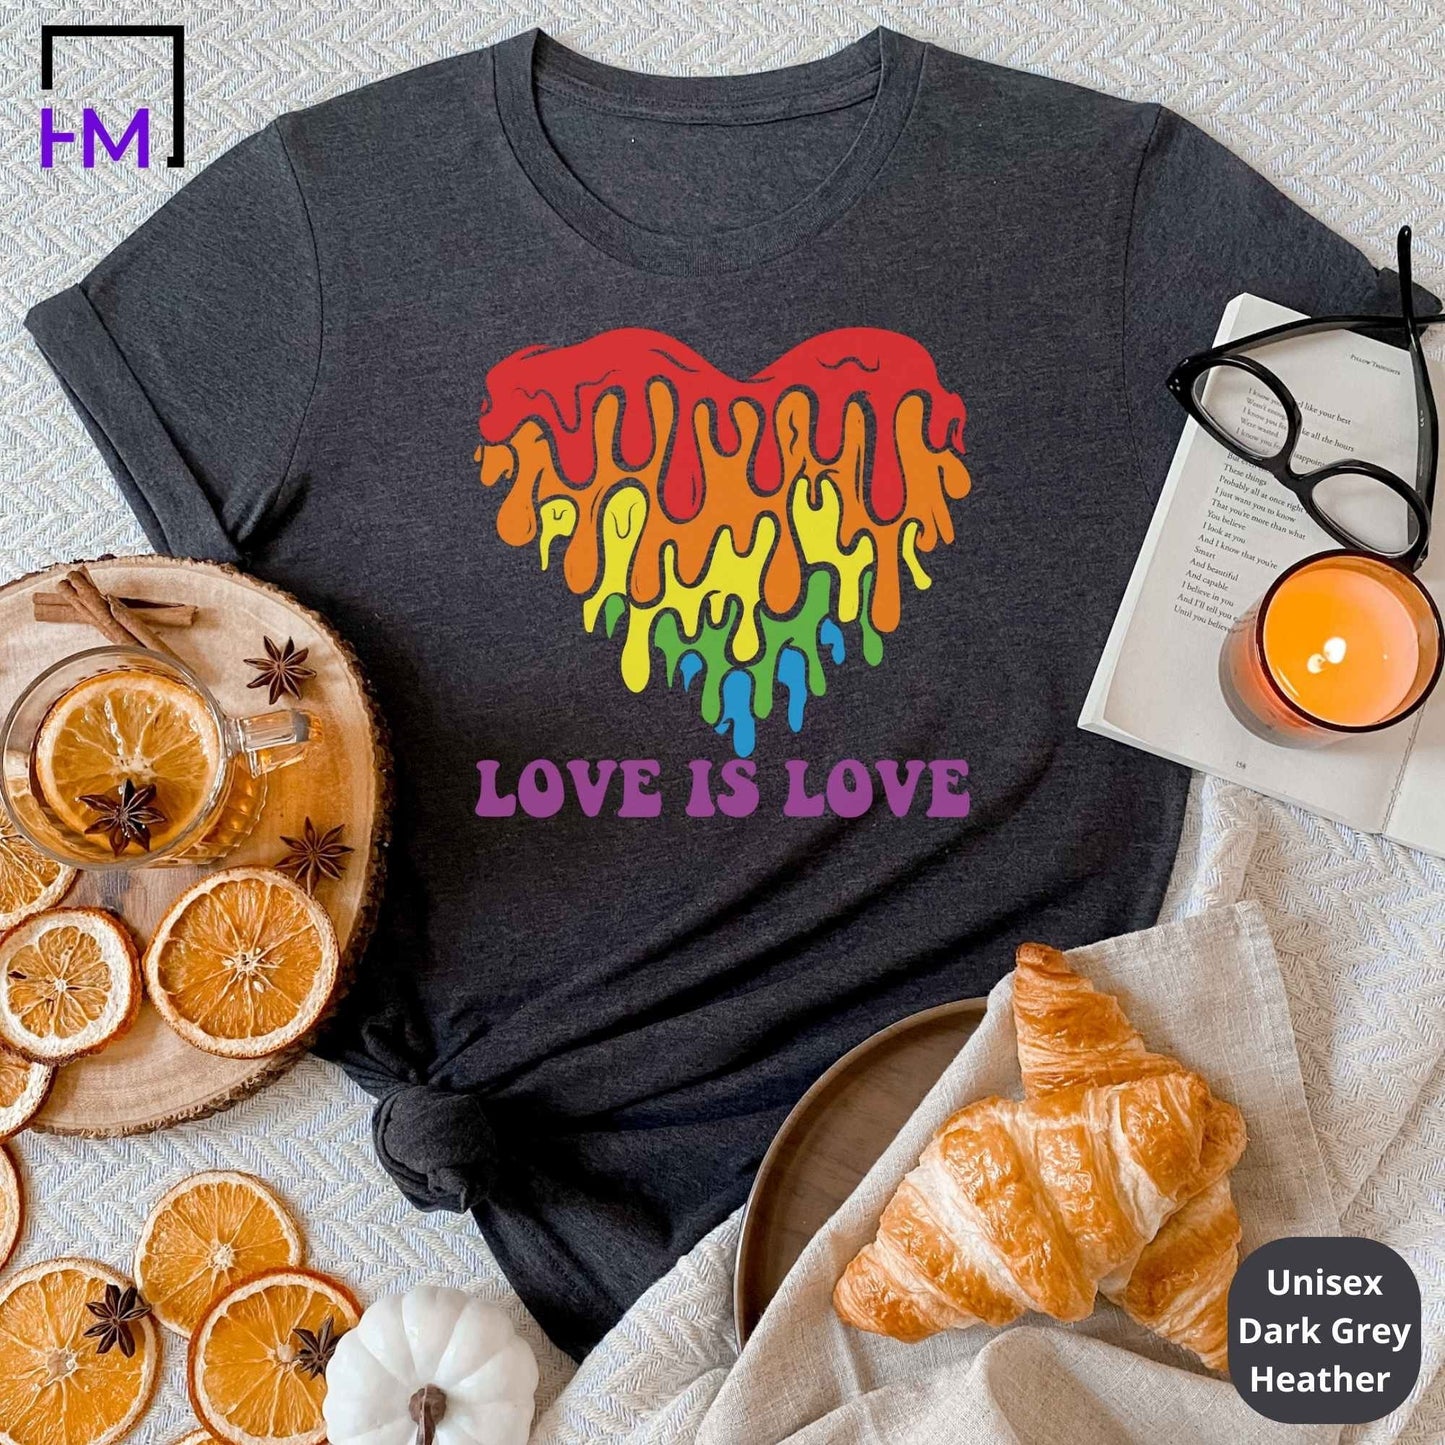 Love is Love Shirt, Love Wins Tie Dye Shirt, Love Always Wins T-Shirt, Women's Love Wins Heart Tee, LGBTQ Support Shirts, LGBTQ Pride Shirts